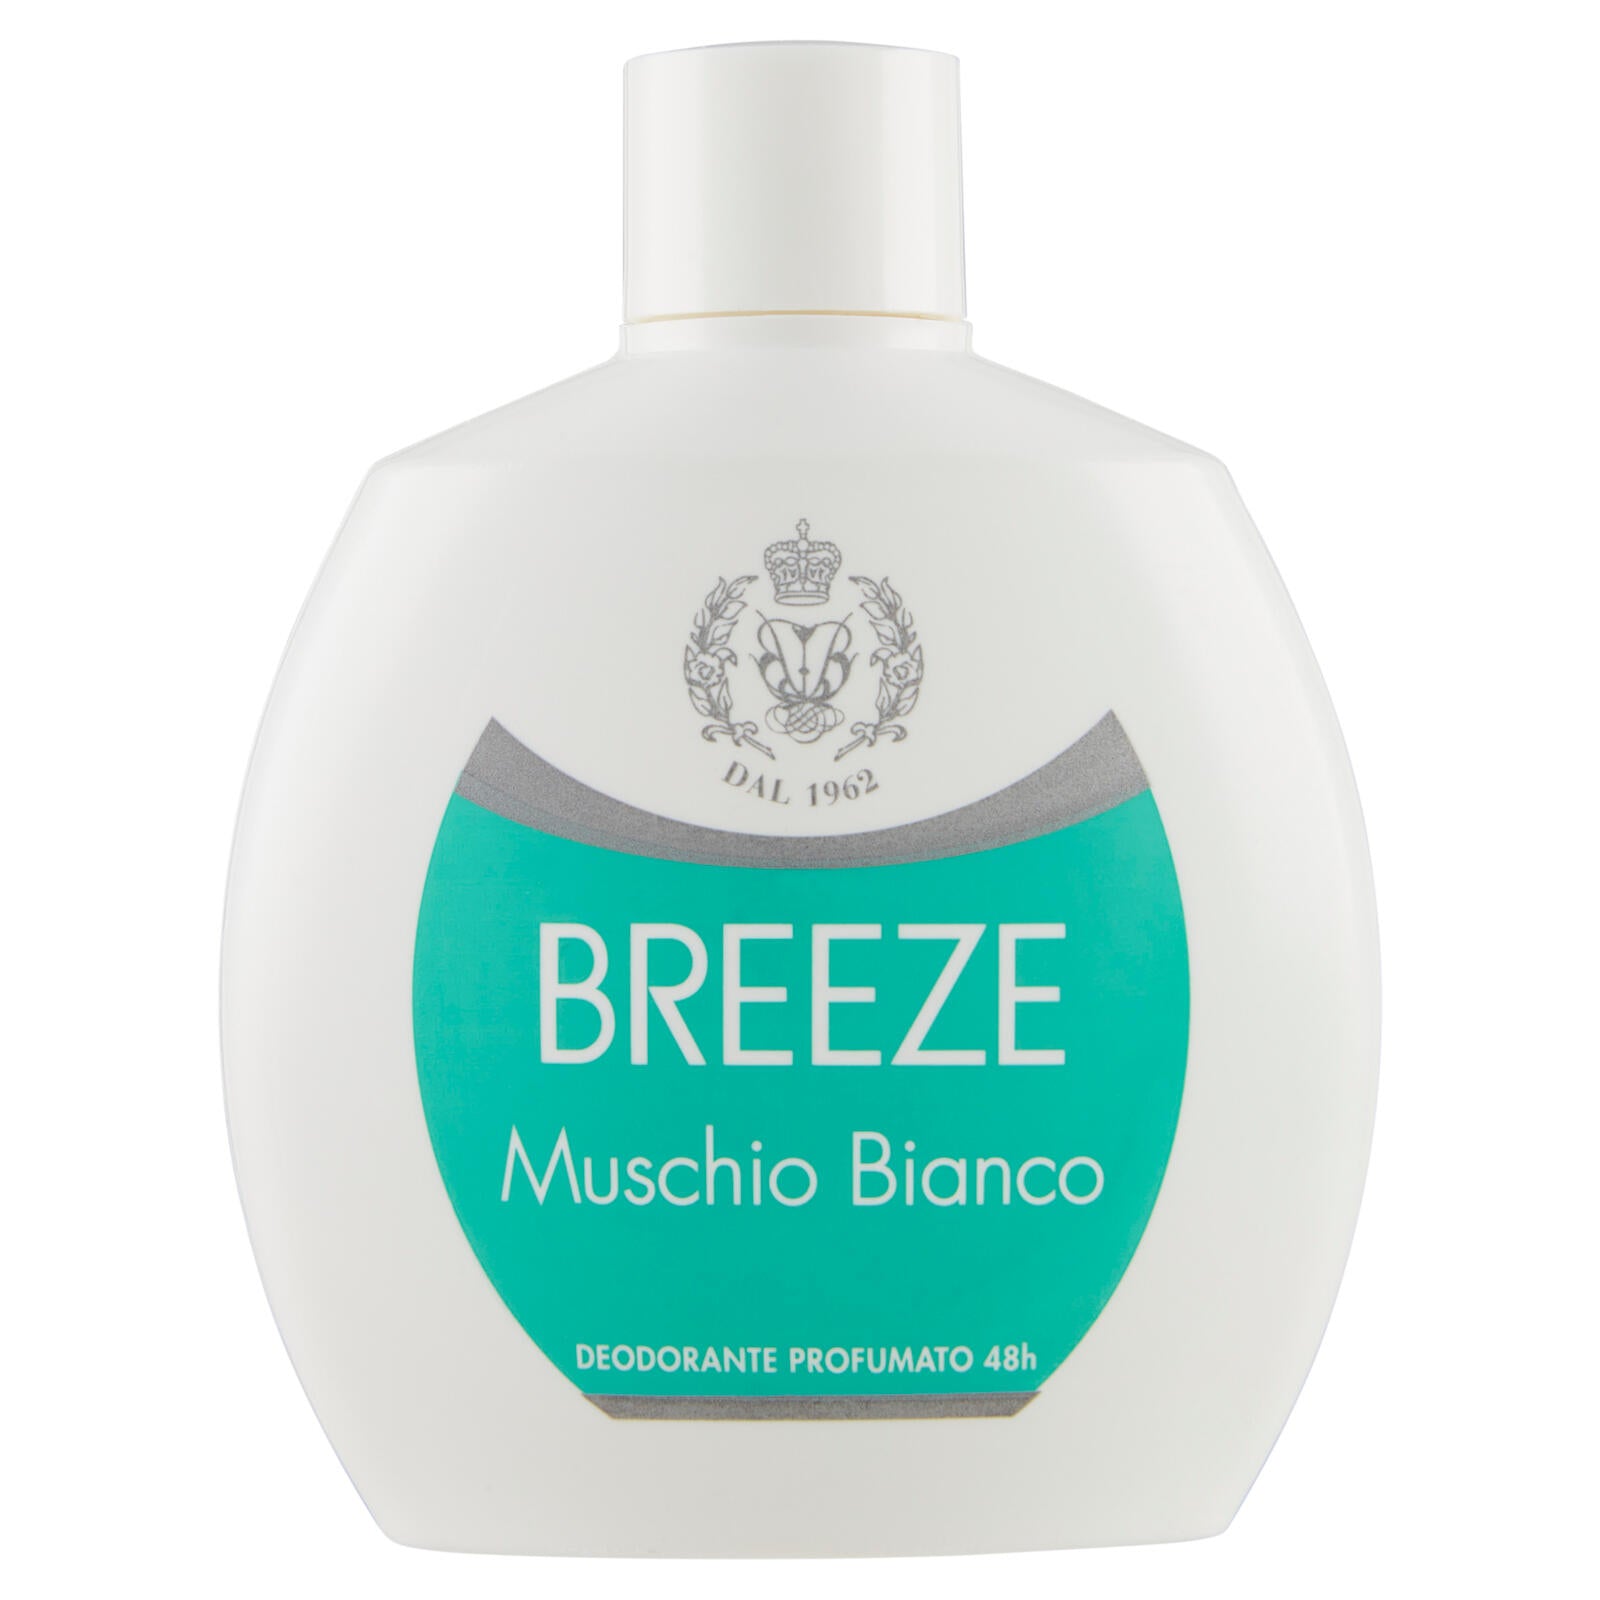 Breeze Muschio Bianco Deodorante Profumato 48h 100 mL